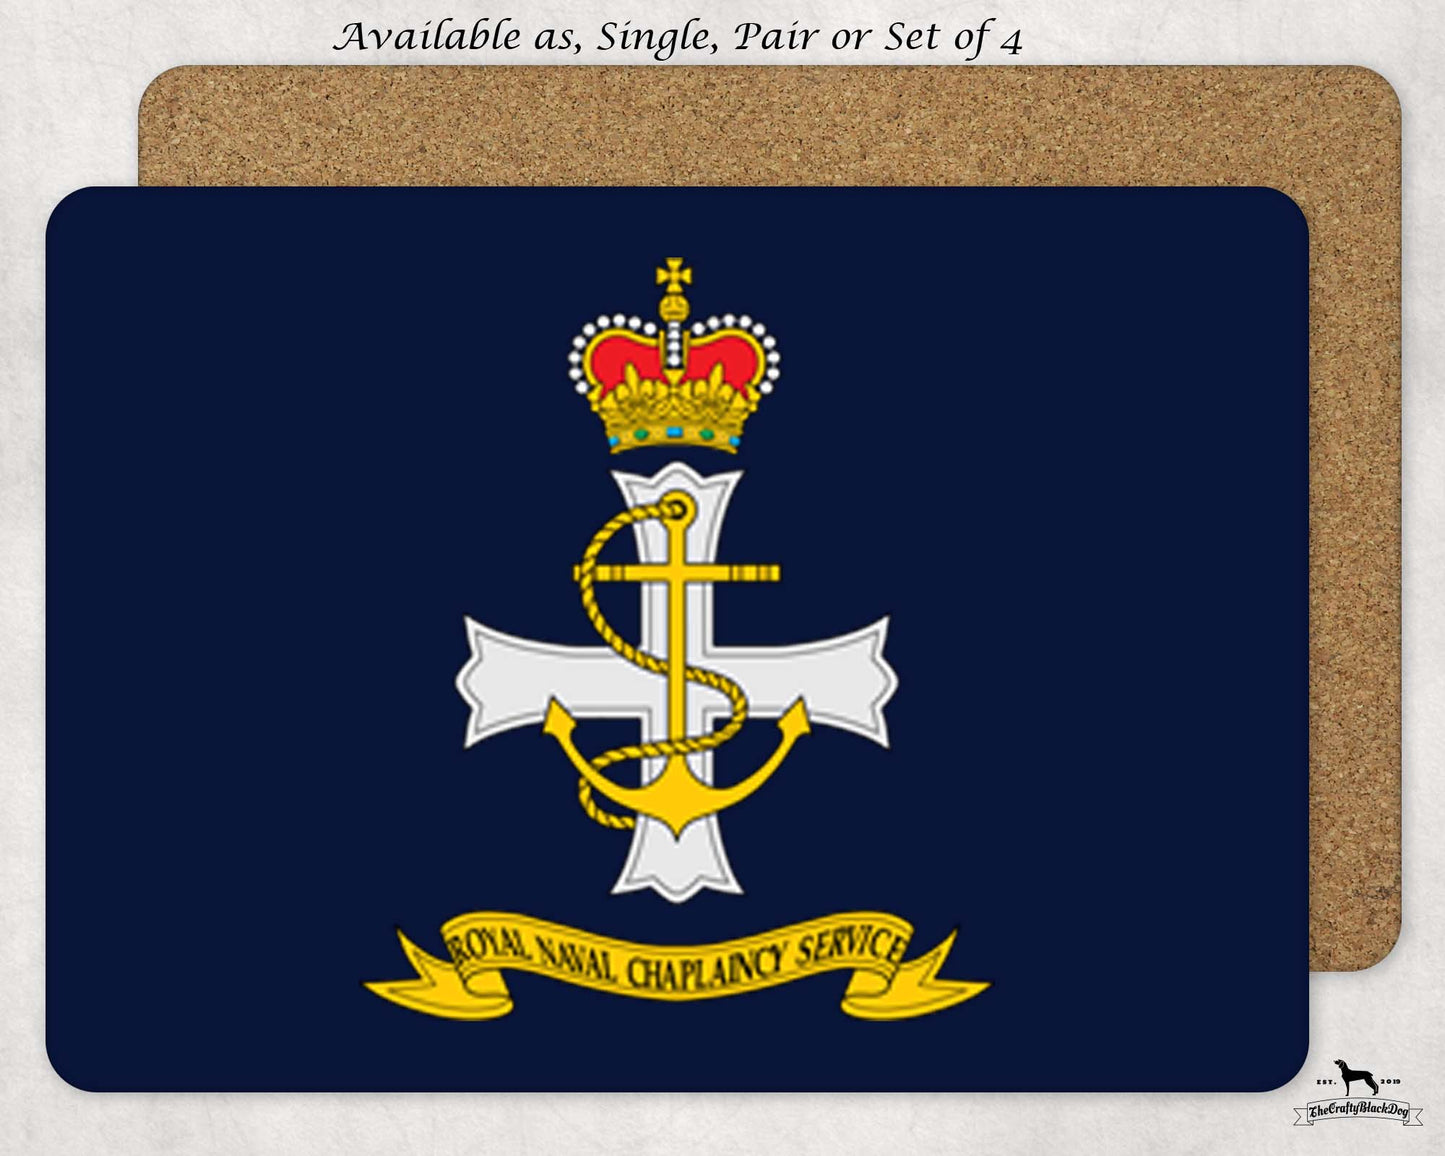 Royal Naval Chaplaincy Service - Placemat(s)